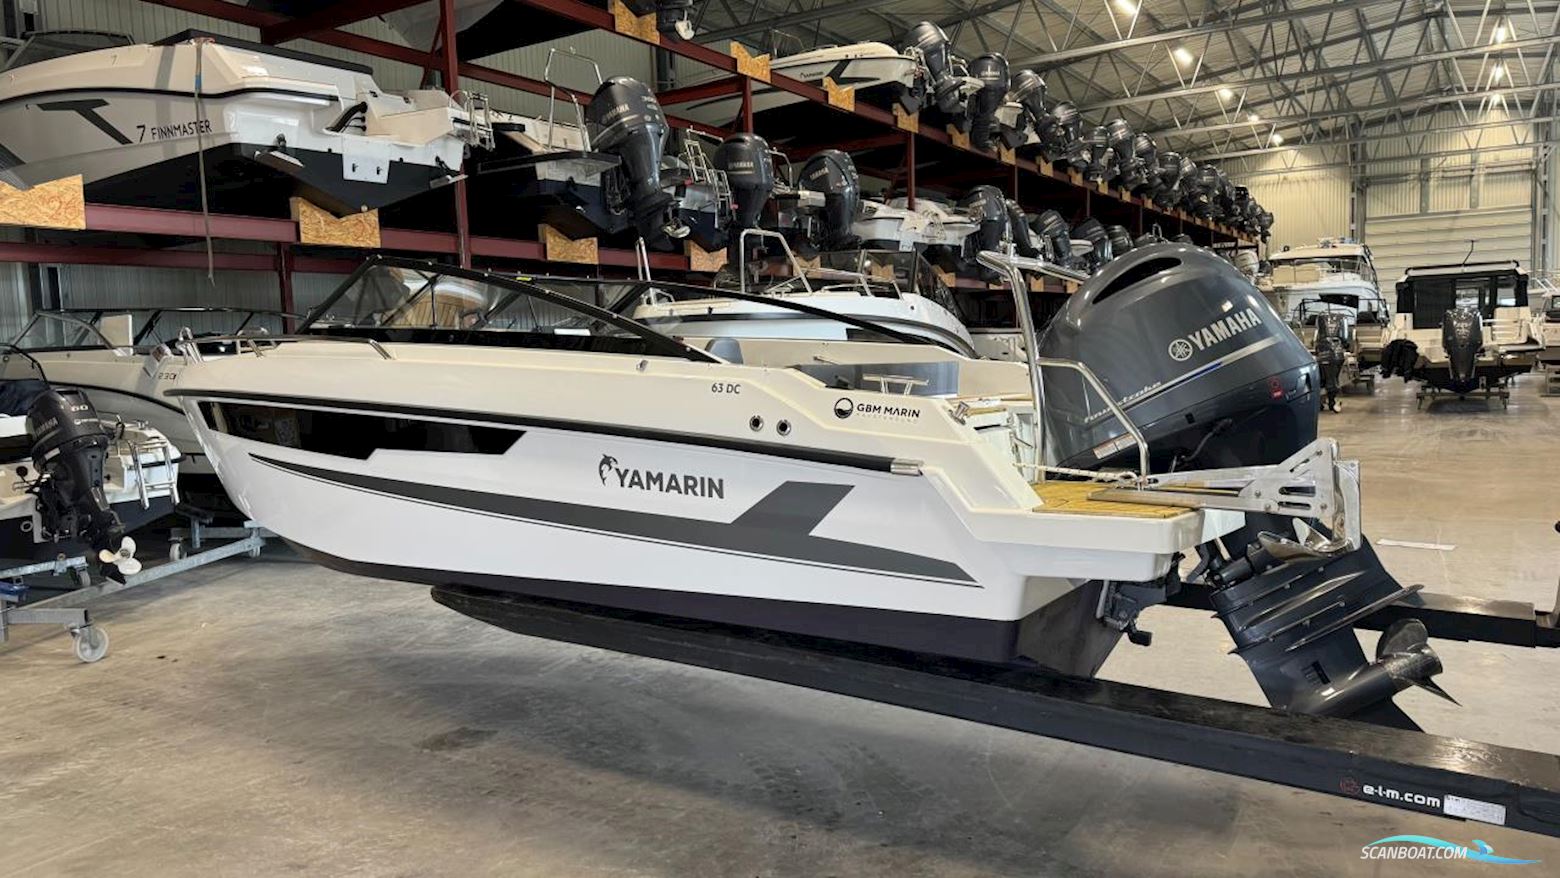 Yamarin 63 DC Motor boat 2022, with Yamaha engine, Sweden